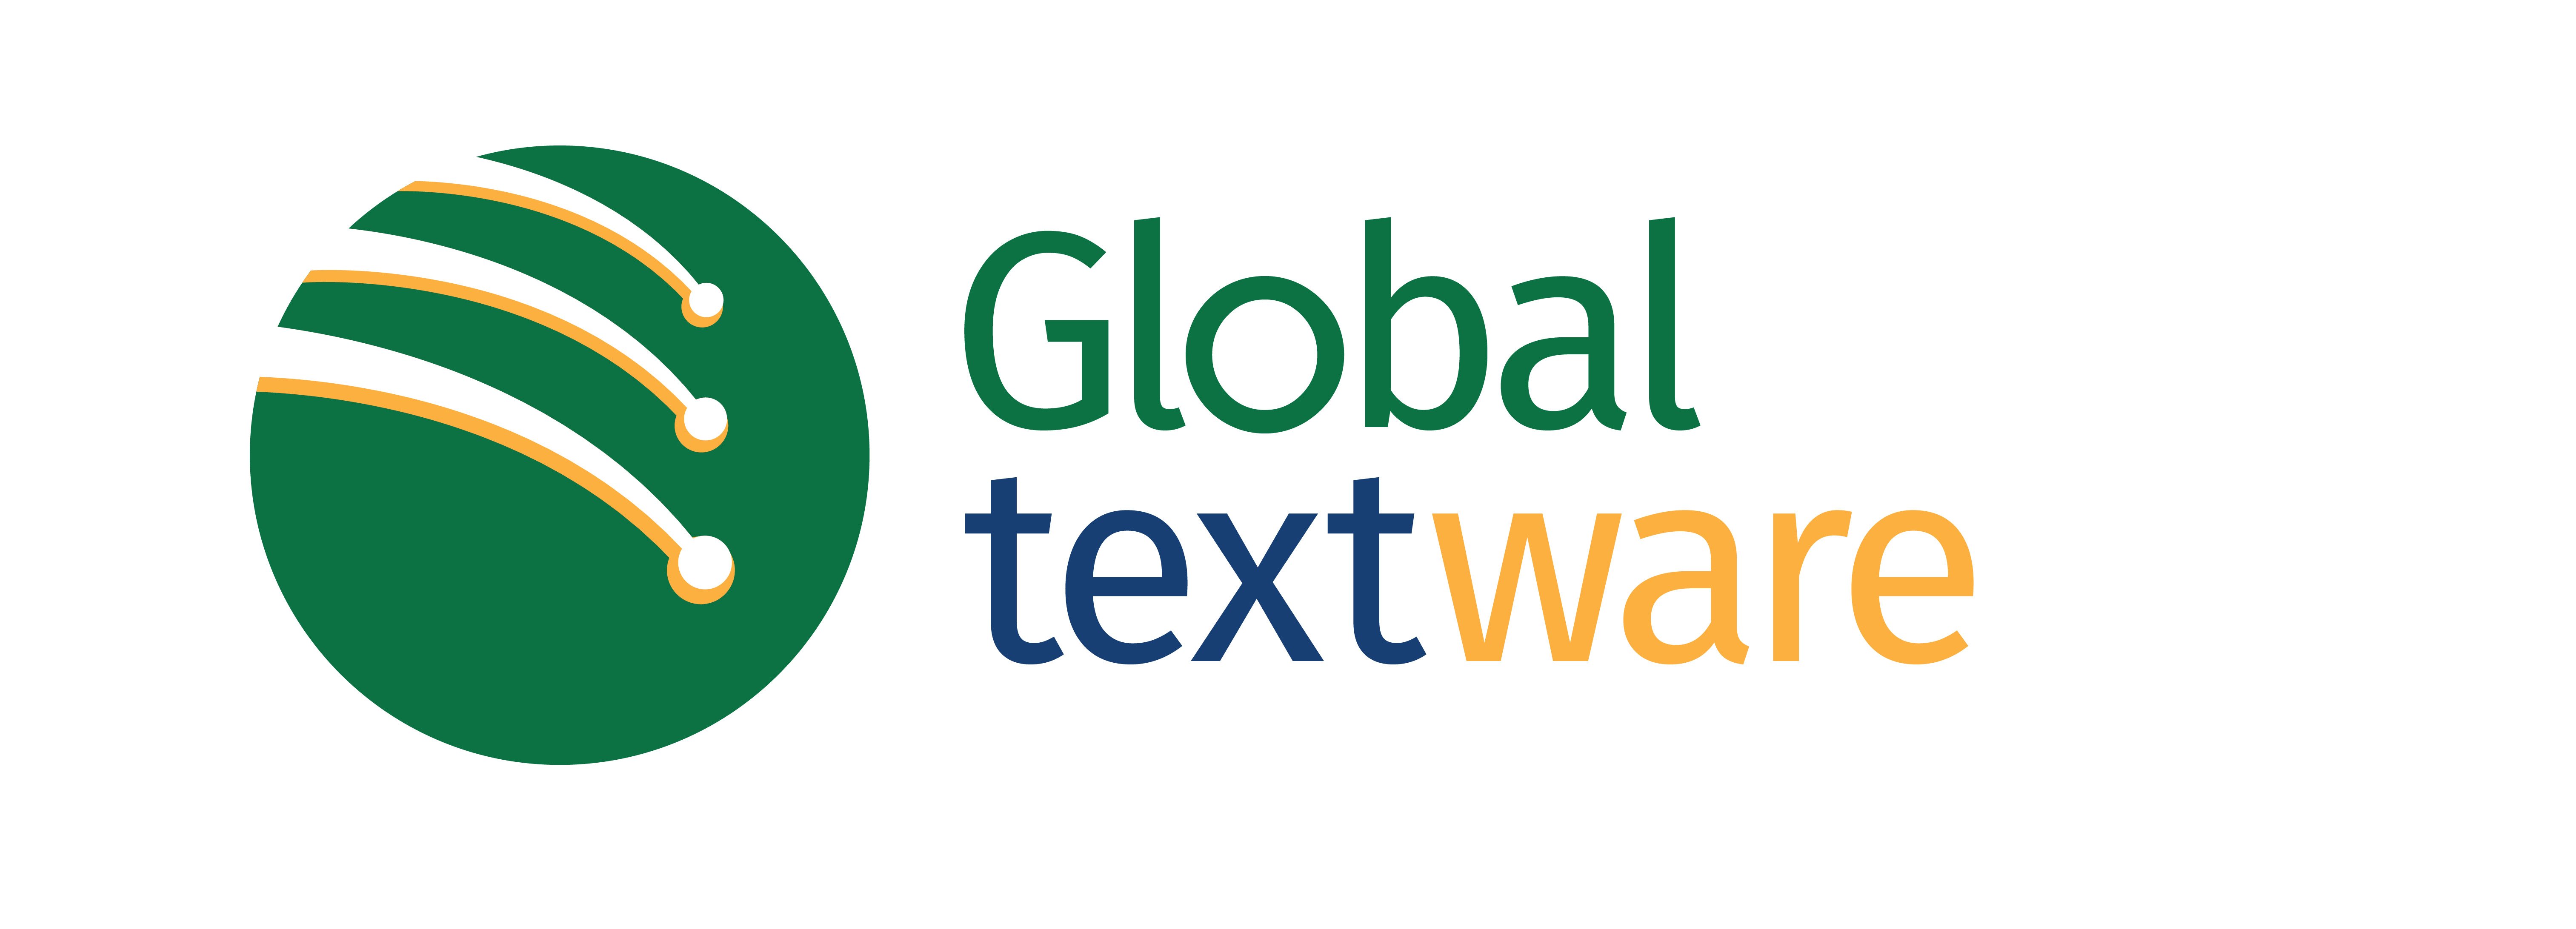 Global textware